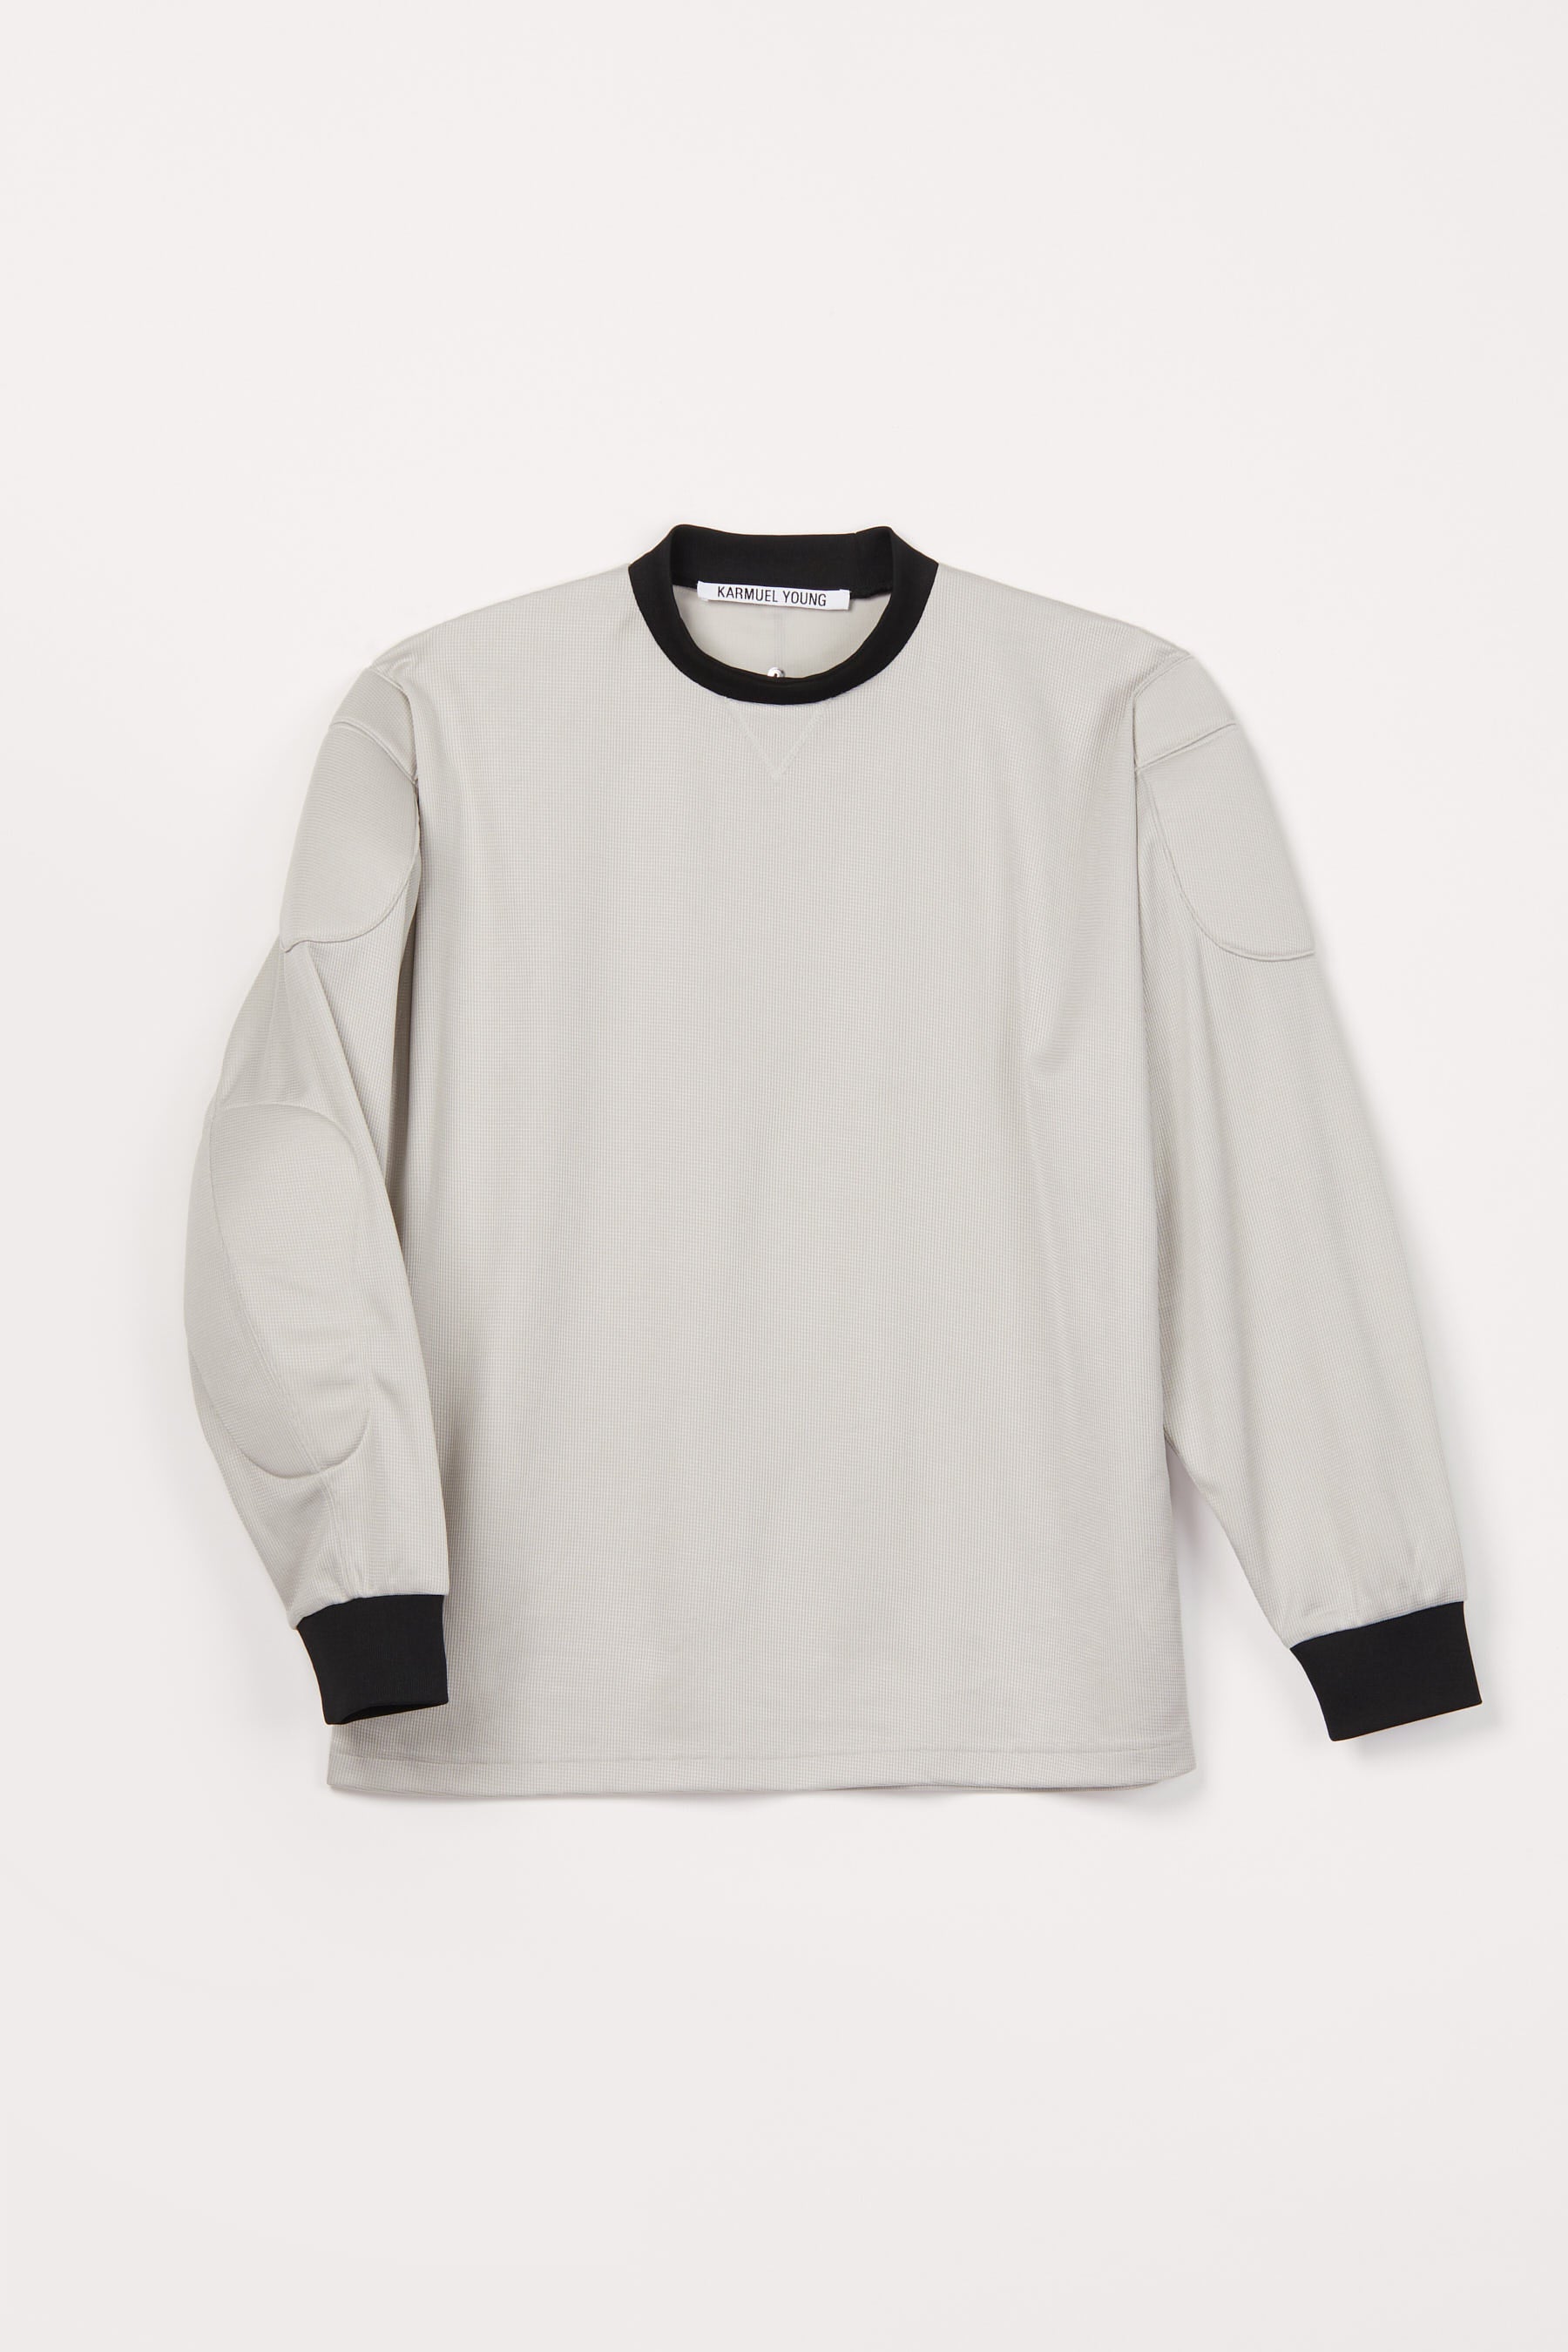 Grey Strong Arm Padded Sweatshirt